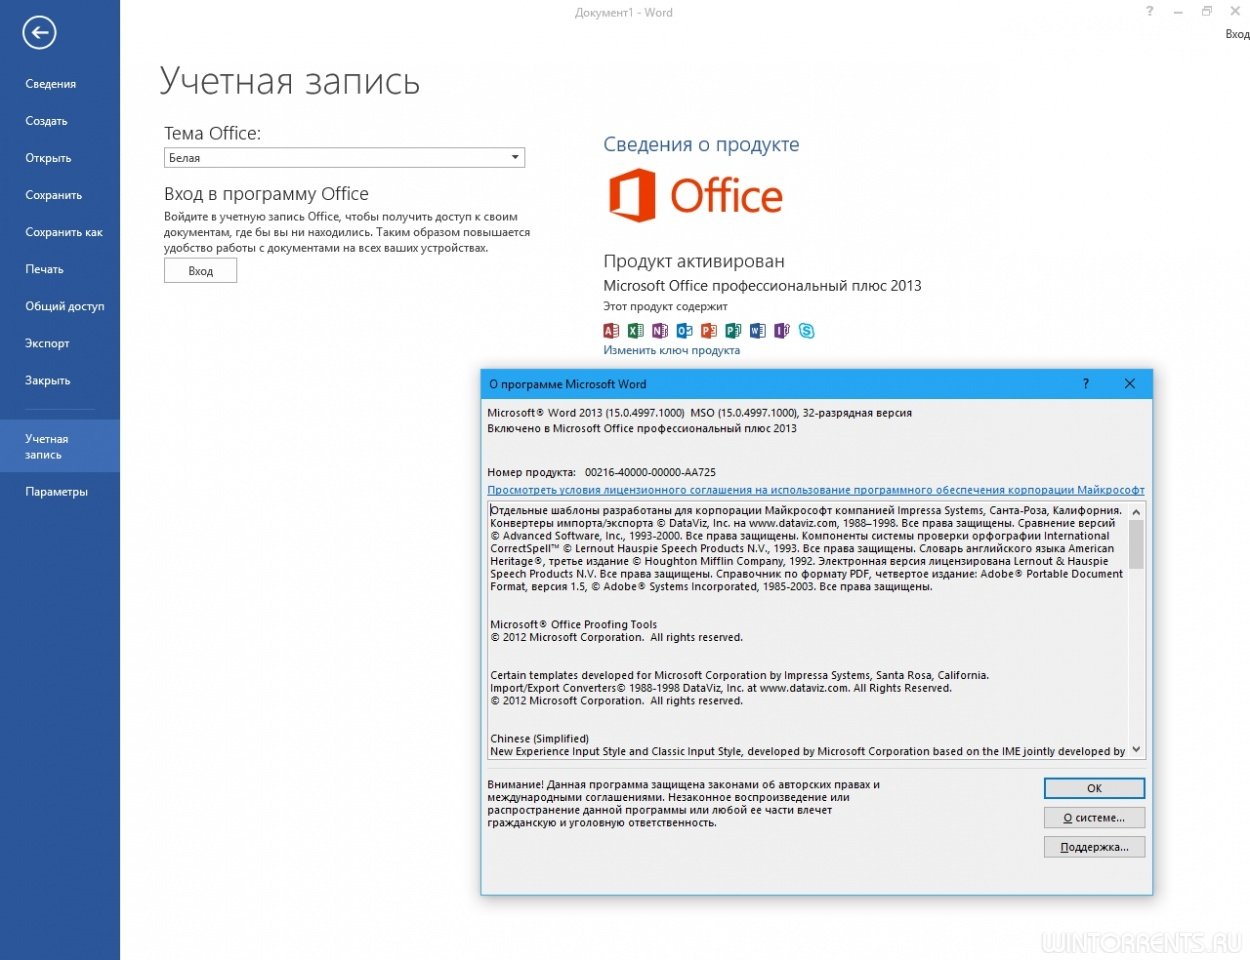 Microsoft office 2013 x64. Программы входящие в Microsoft Office 2013. Microsoft Office 2013 REPACK by KPOJIUK Скриншоты. Microsoft Office 2013 системные требования. Microsoft Office 2013 ISO.